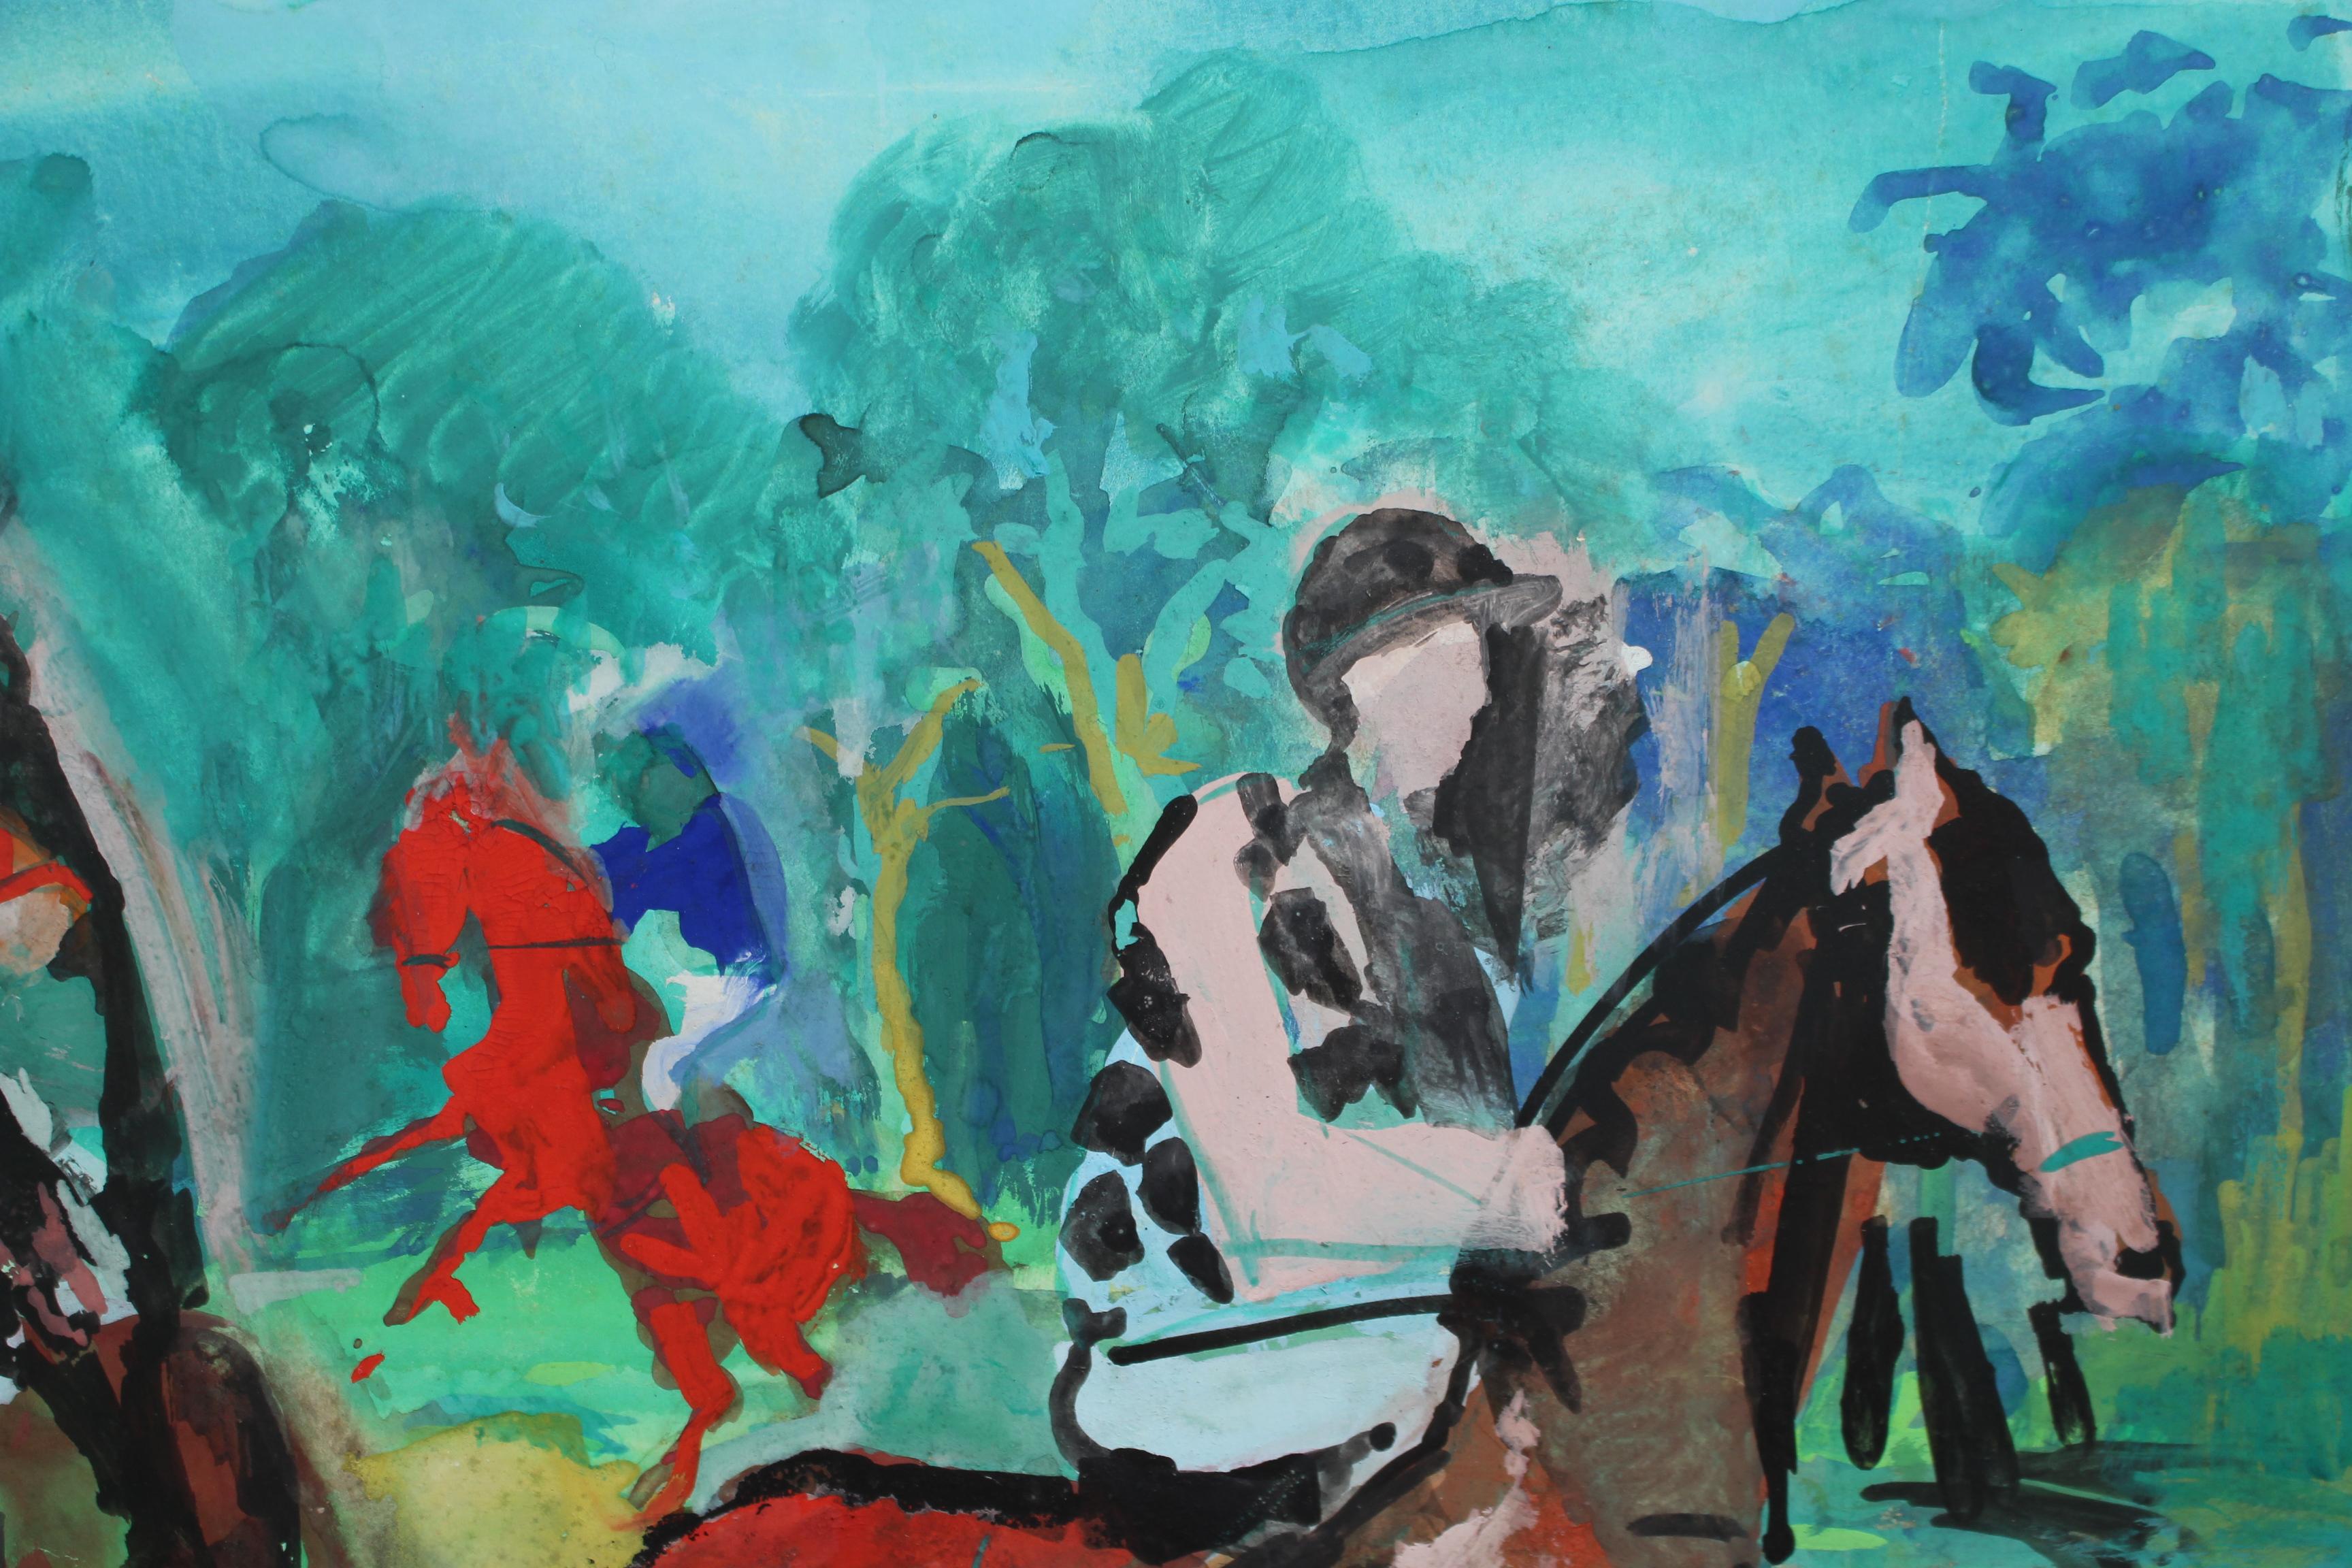 The Racing Horses - Blue Portrait by Pierre Gaillardot 